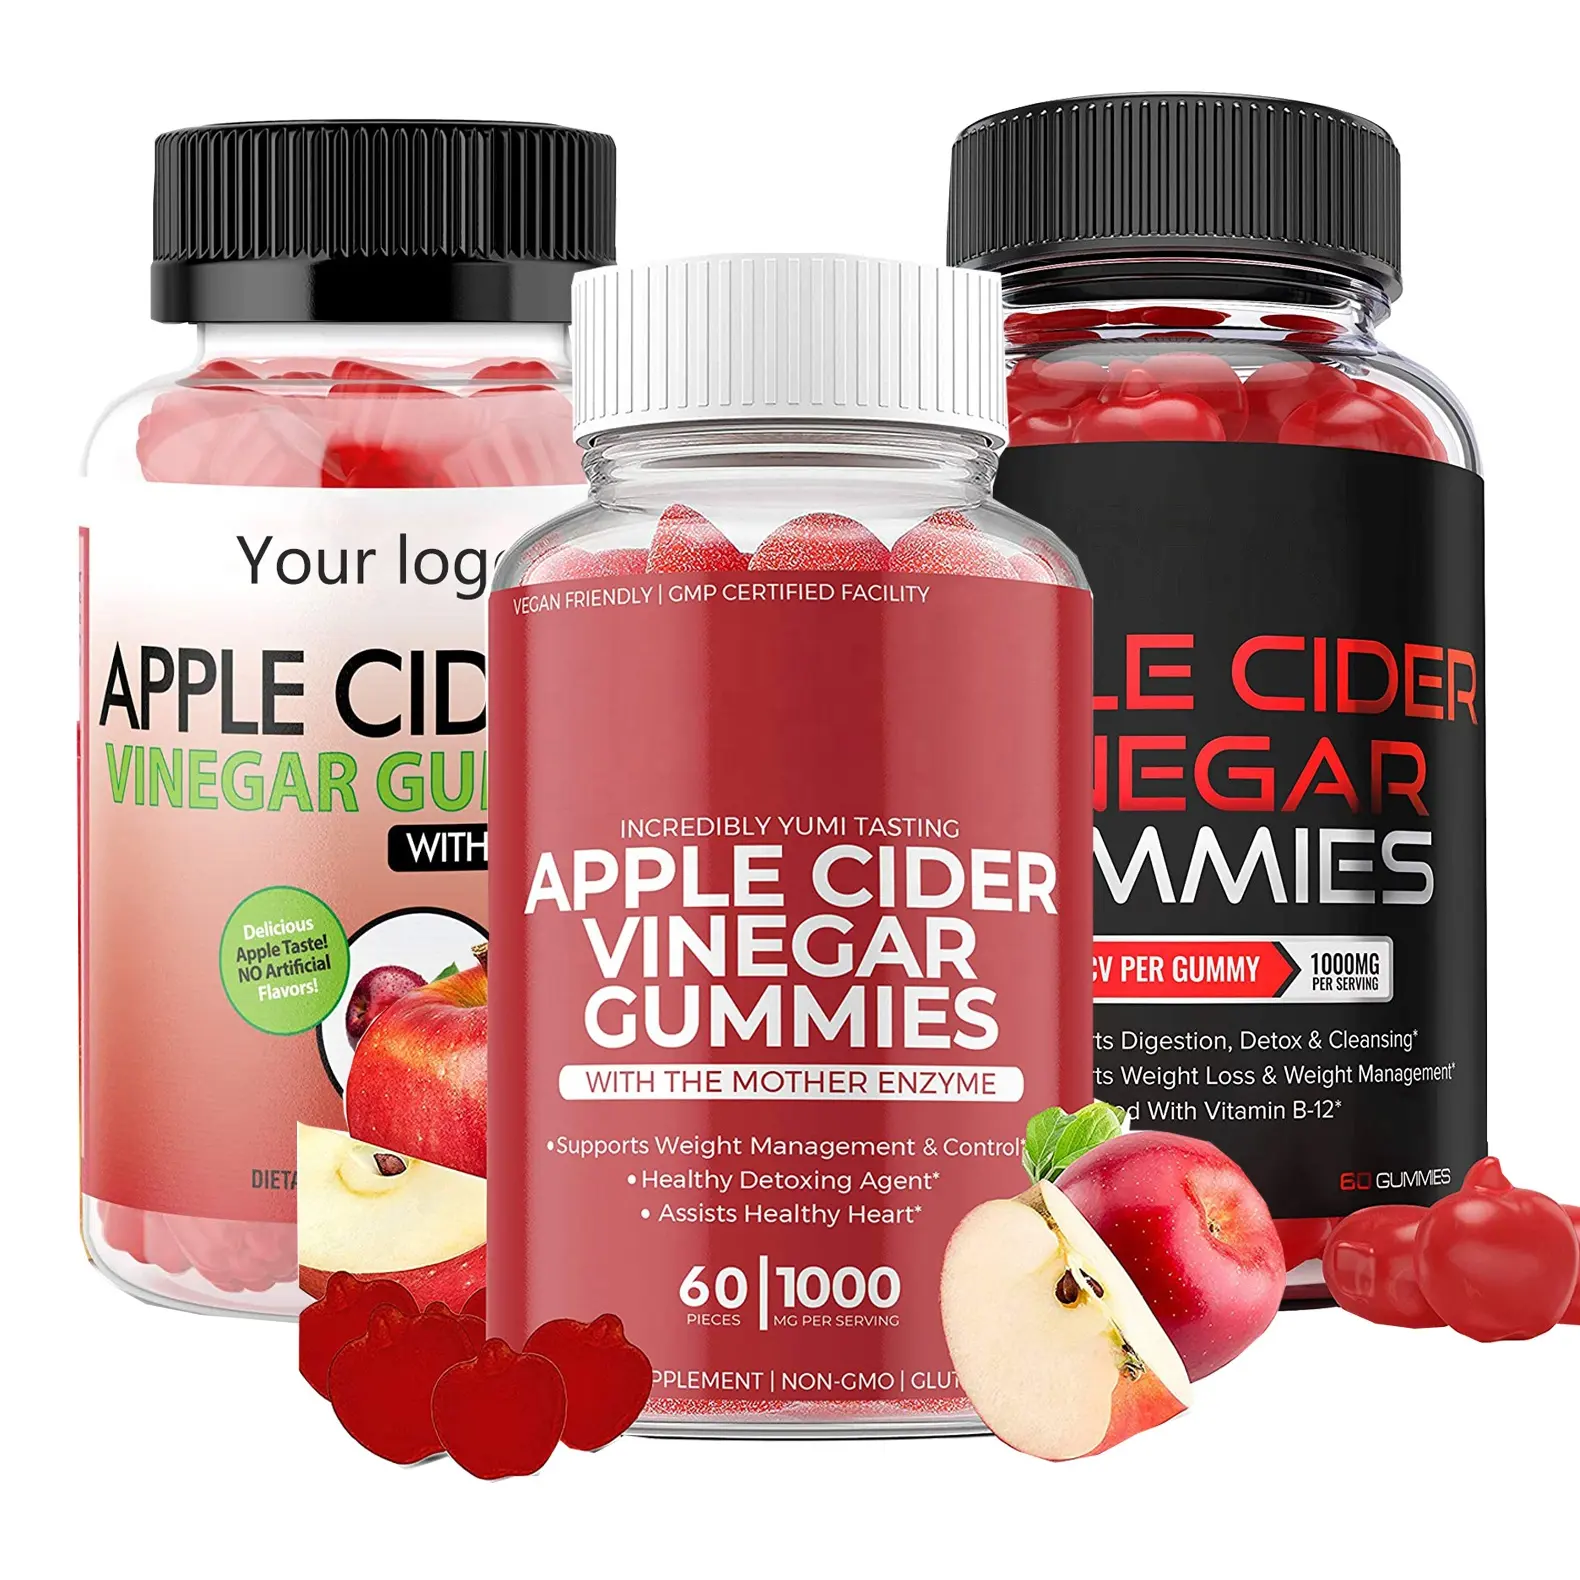 OEM Gewichts verlust Apfel essig Gummis Abnehmen vegane Bio-Apfel essig Gummis